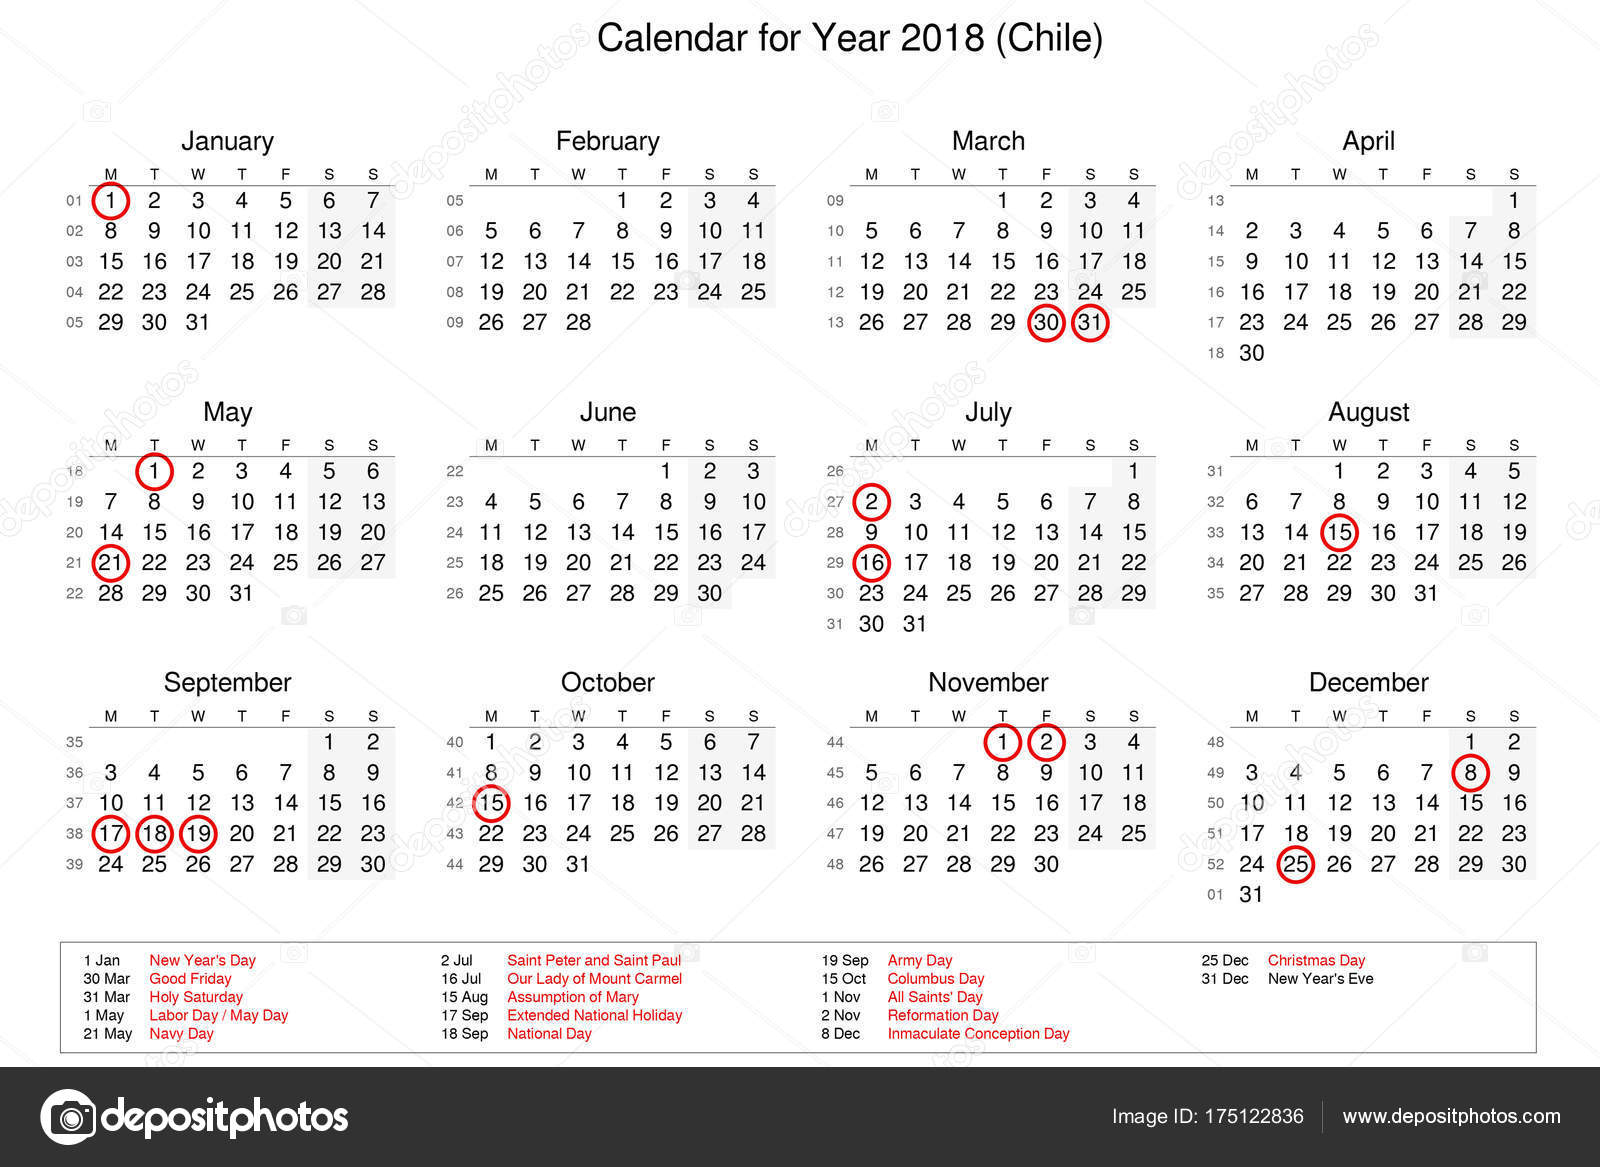 calendario 2018 chile